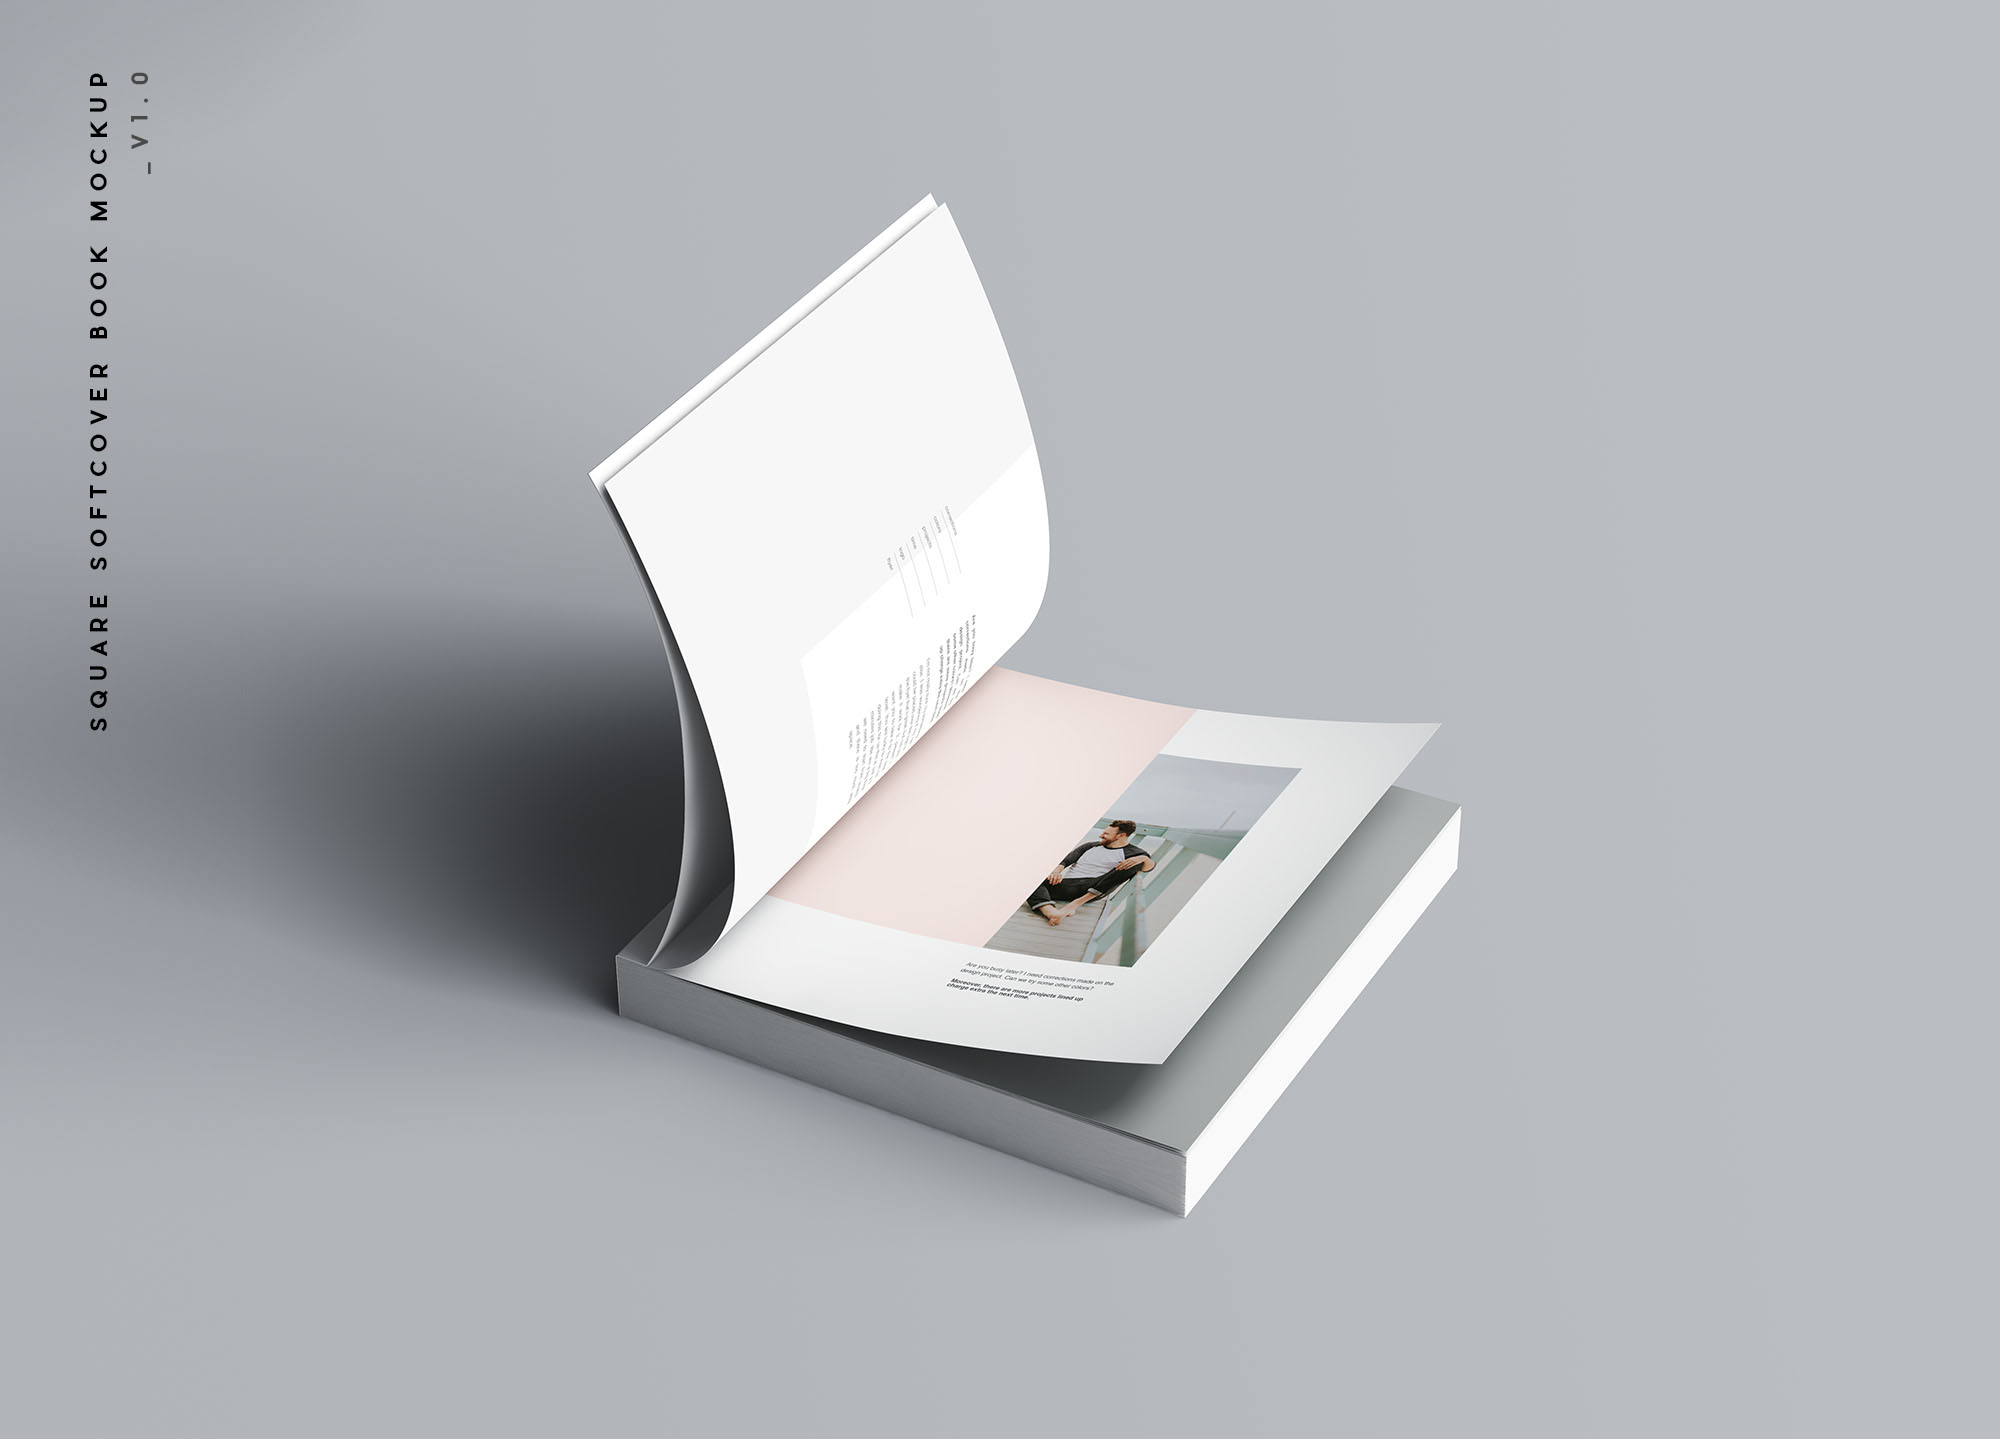 方形软封图书内页版式设计效果图样机大洋岛精选 Square Softcover Book Mockup插图